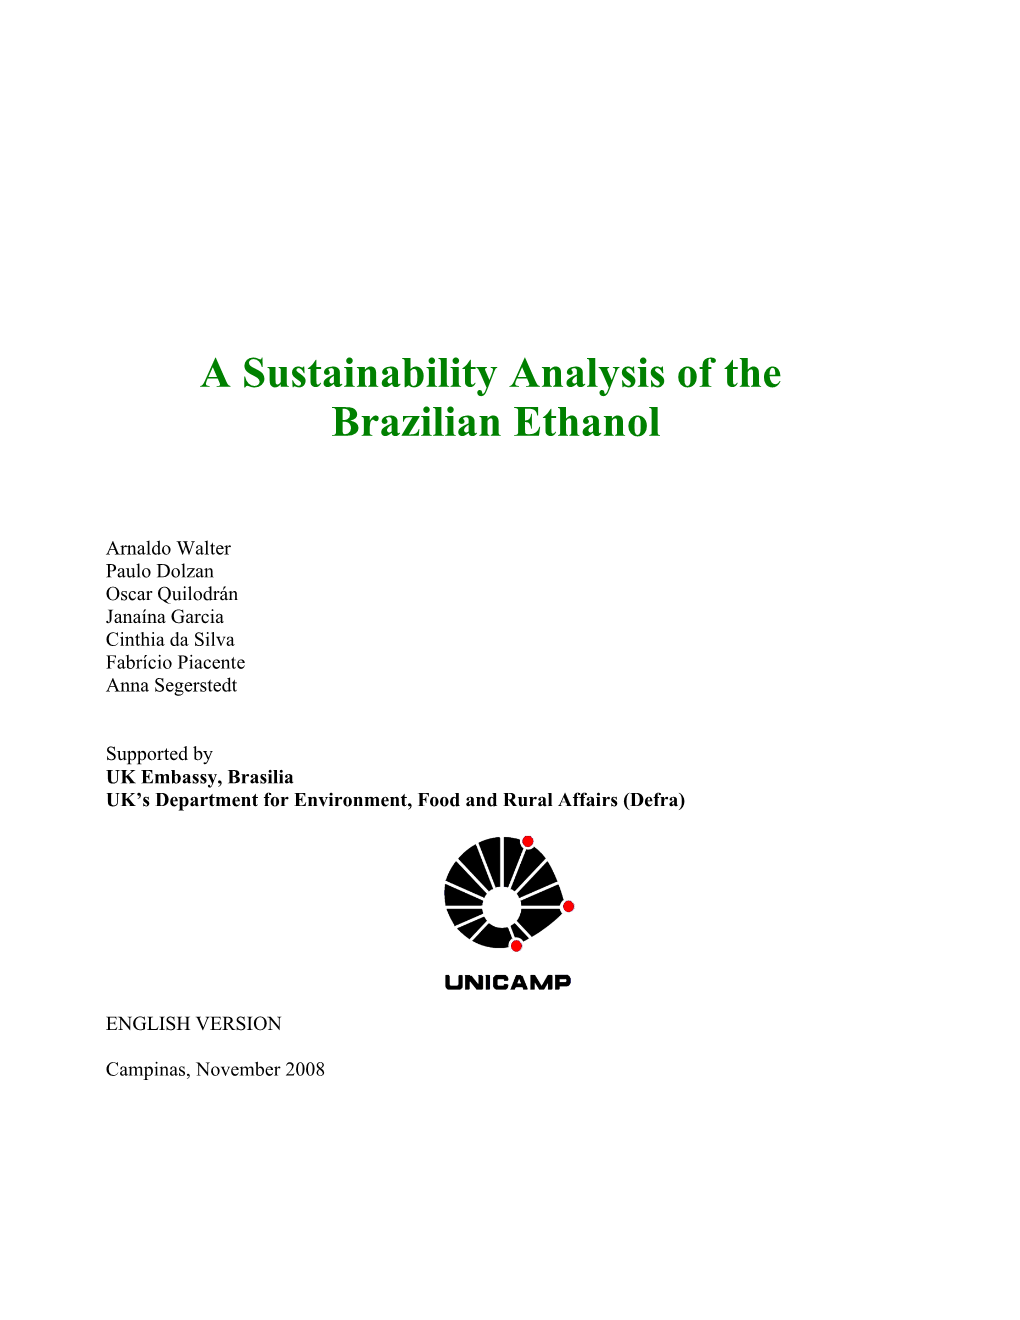 A Sustainability Analysis of the Brazilian Ethanol